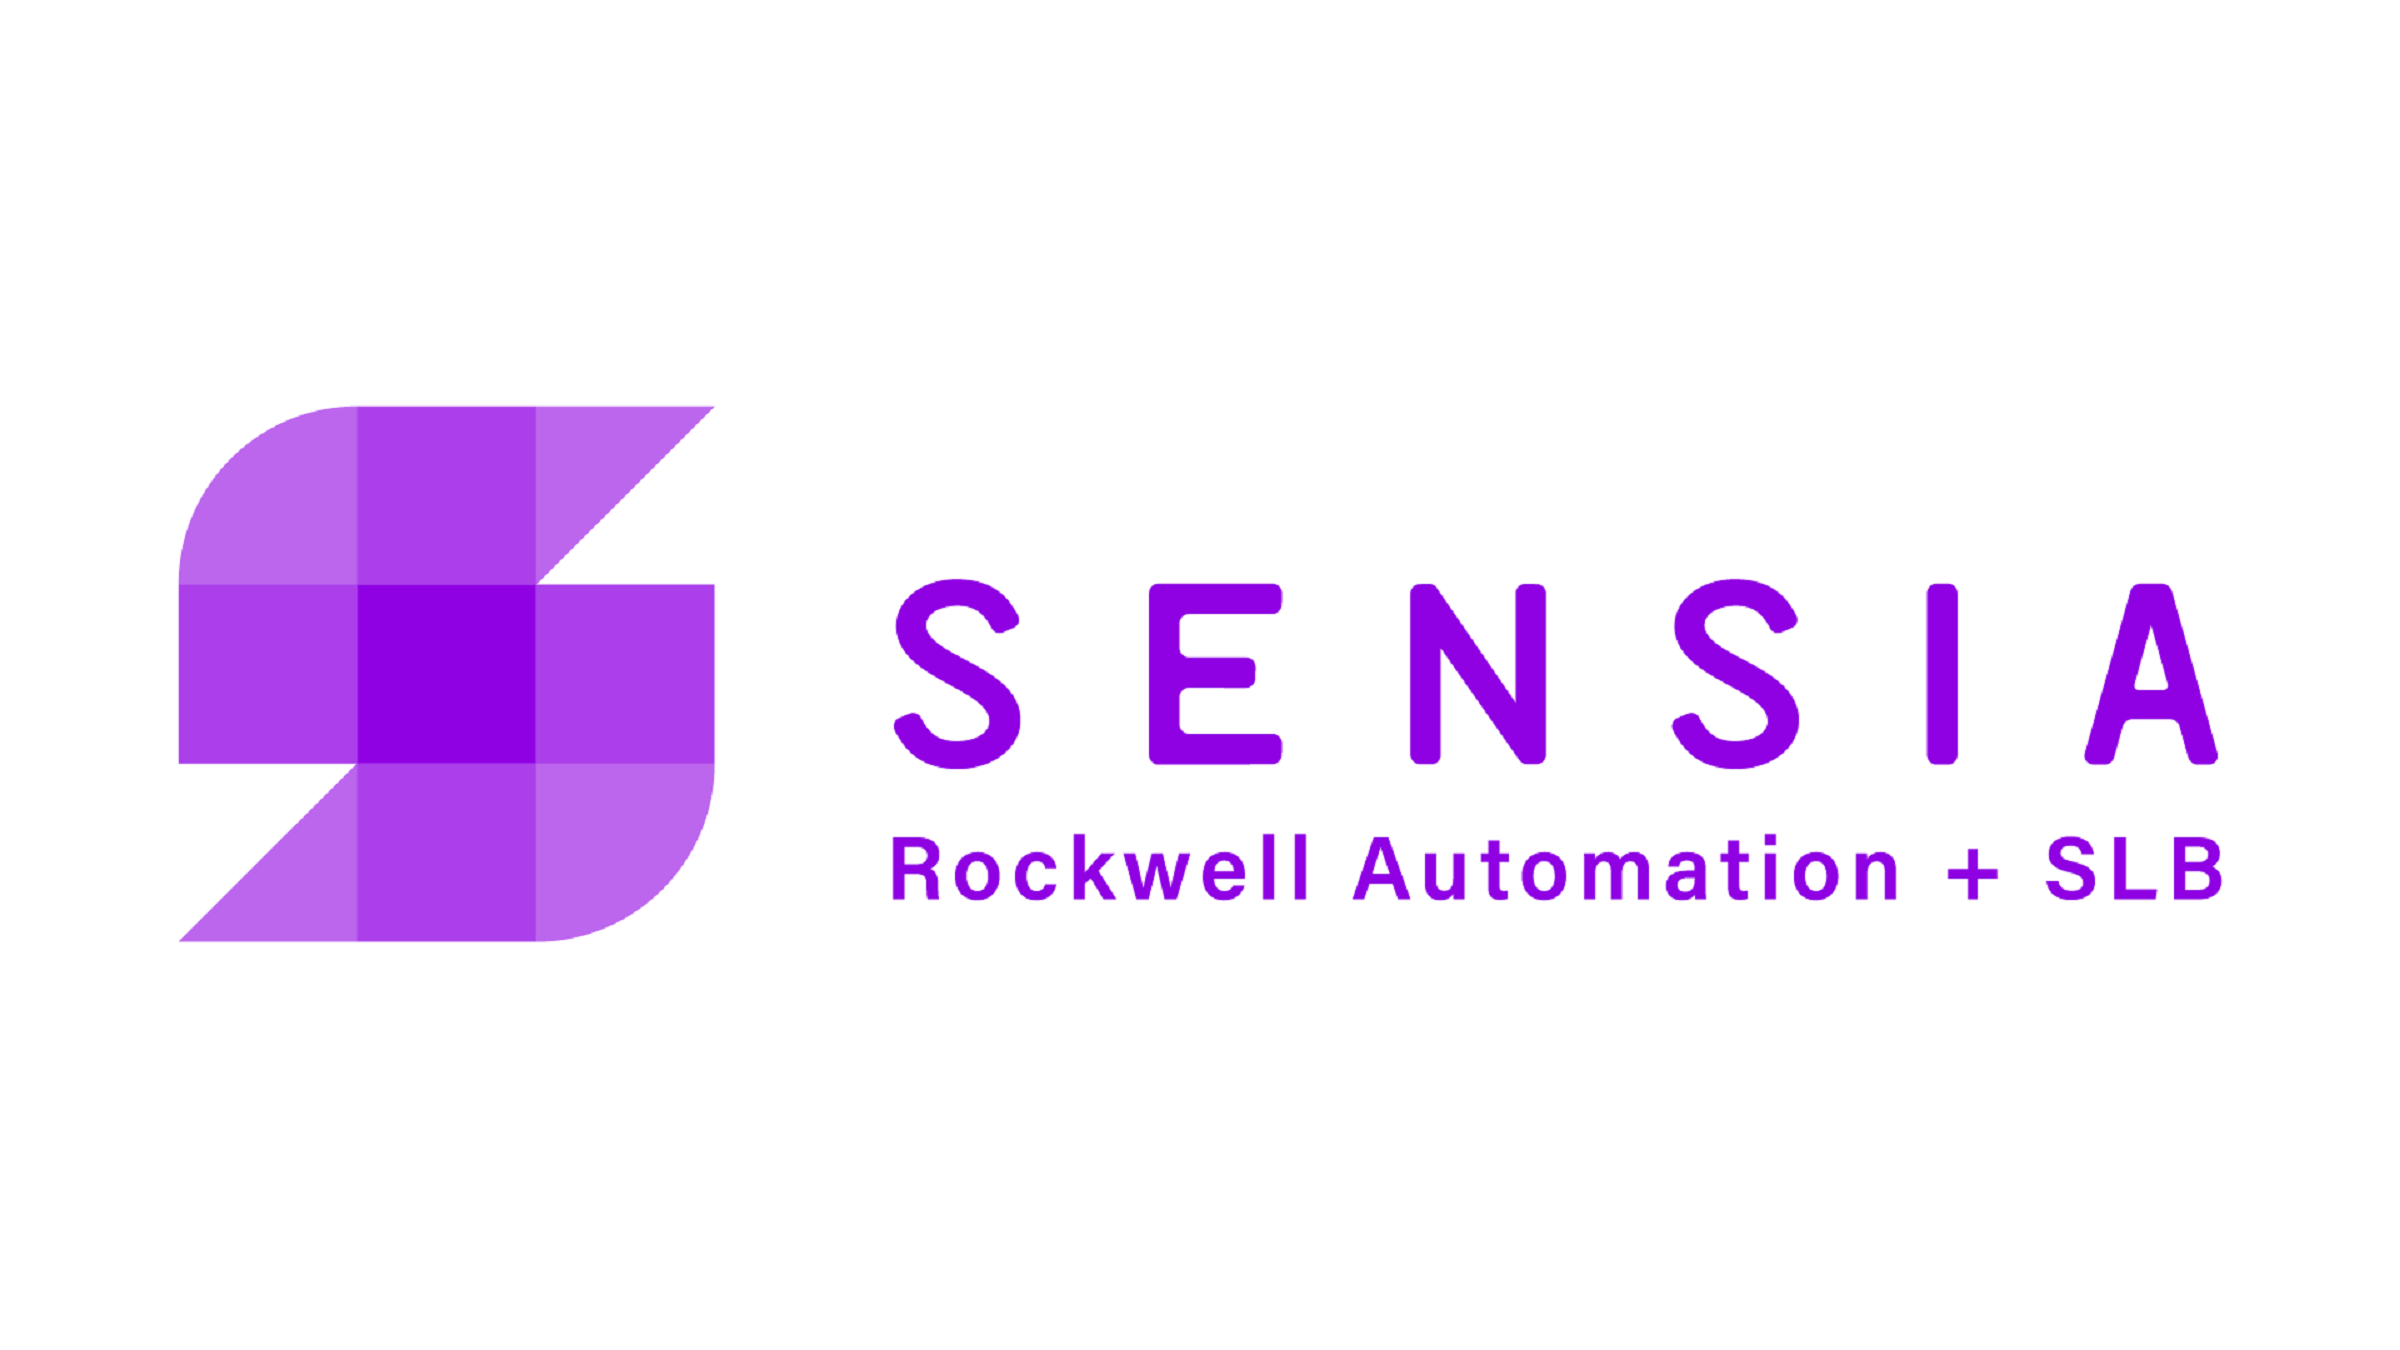 SENSIA Rockwell Automation + SLB Logo